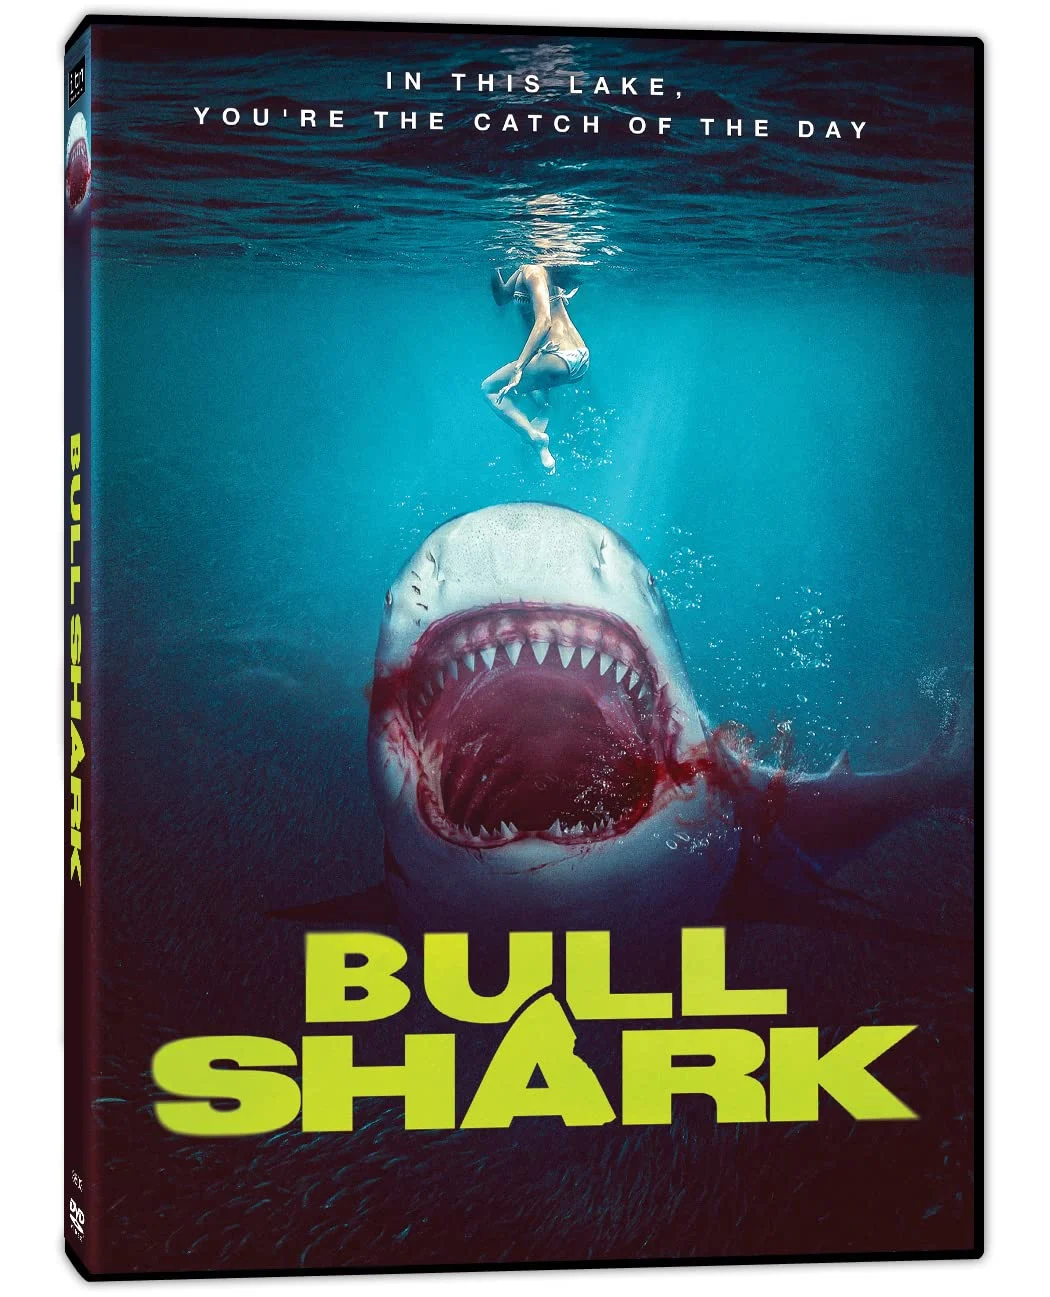 Bull Shark (DVD) on MovieShack